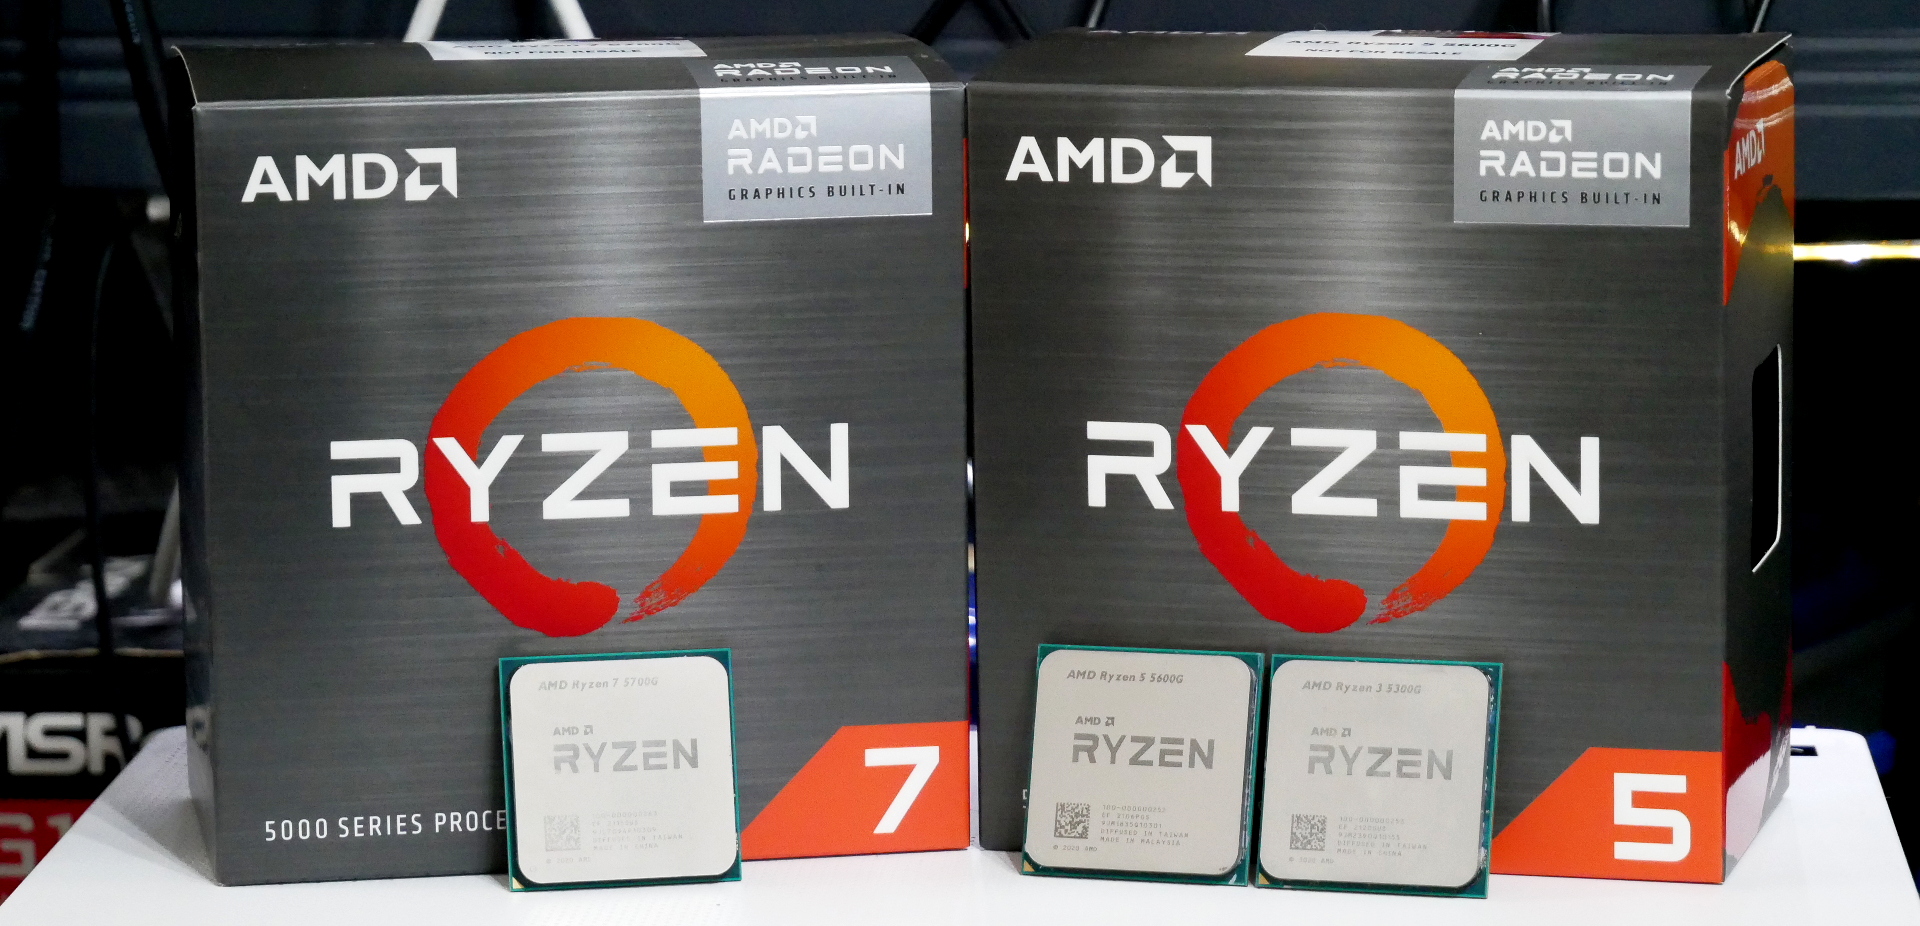 Conclusions: A Great Alternative to Regular Ryzen - The AMD Ryzen